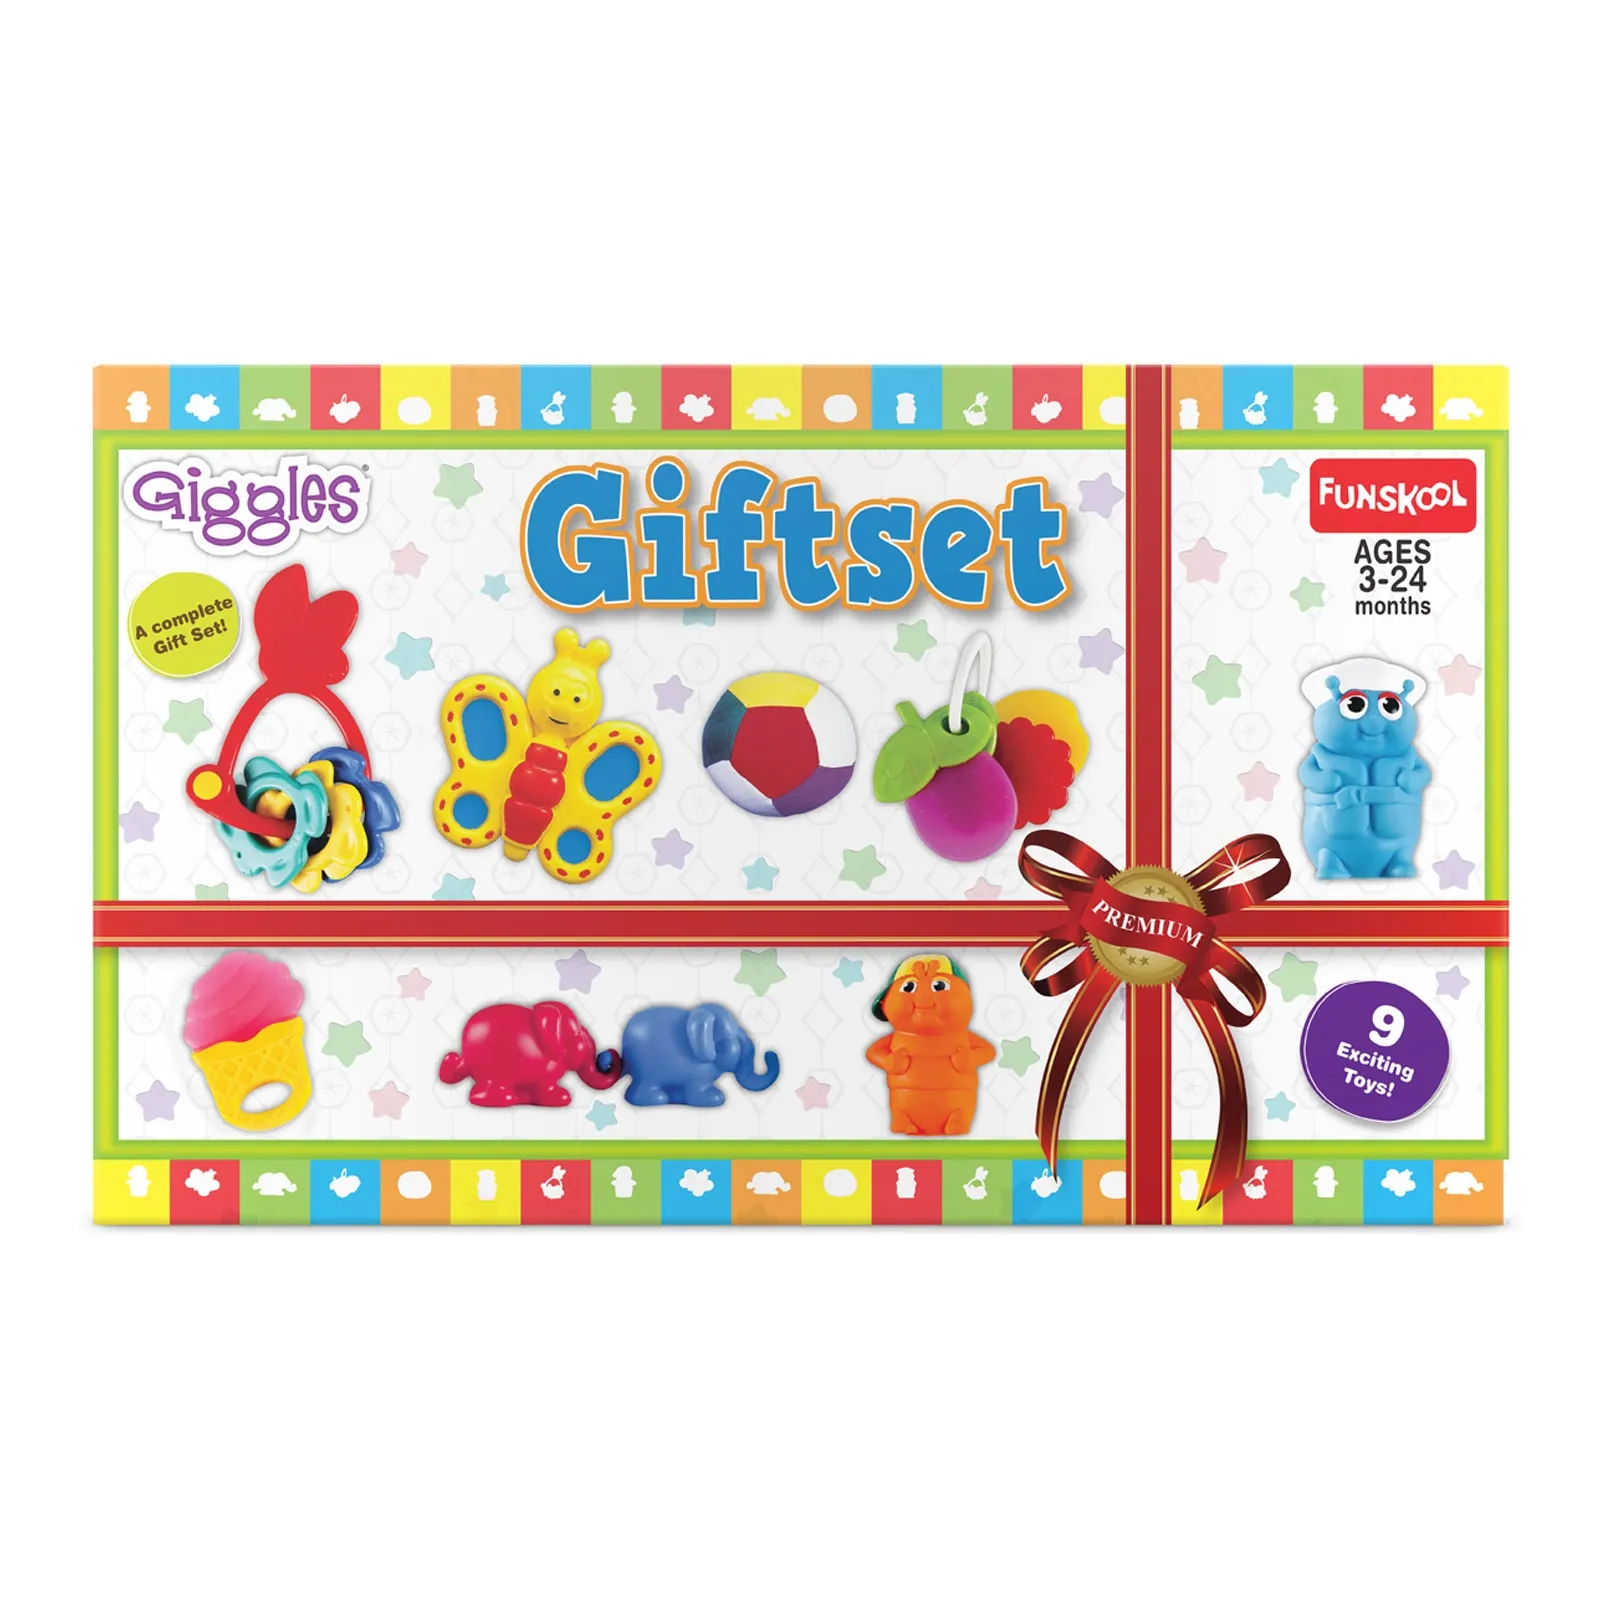 Funskool Giggles Gift Set Premium 9 Toys Set Multi Colour